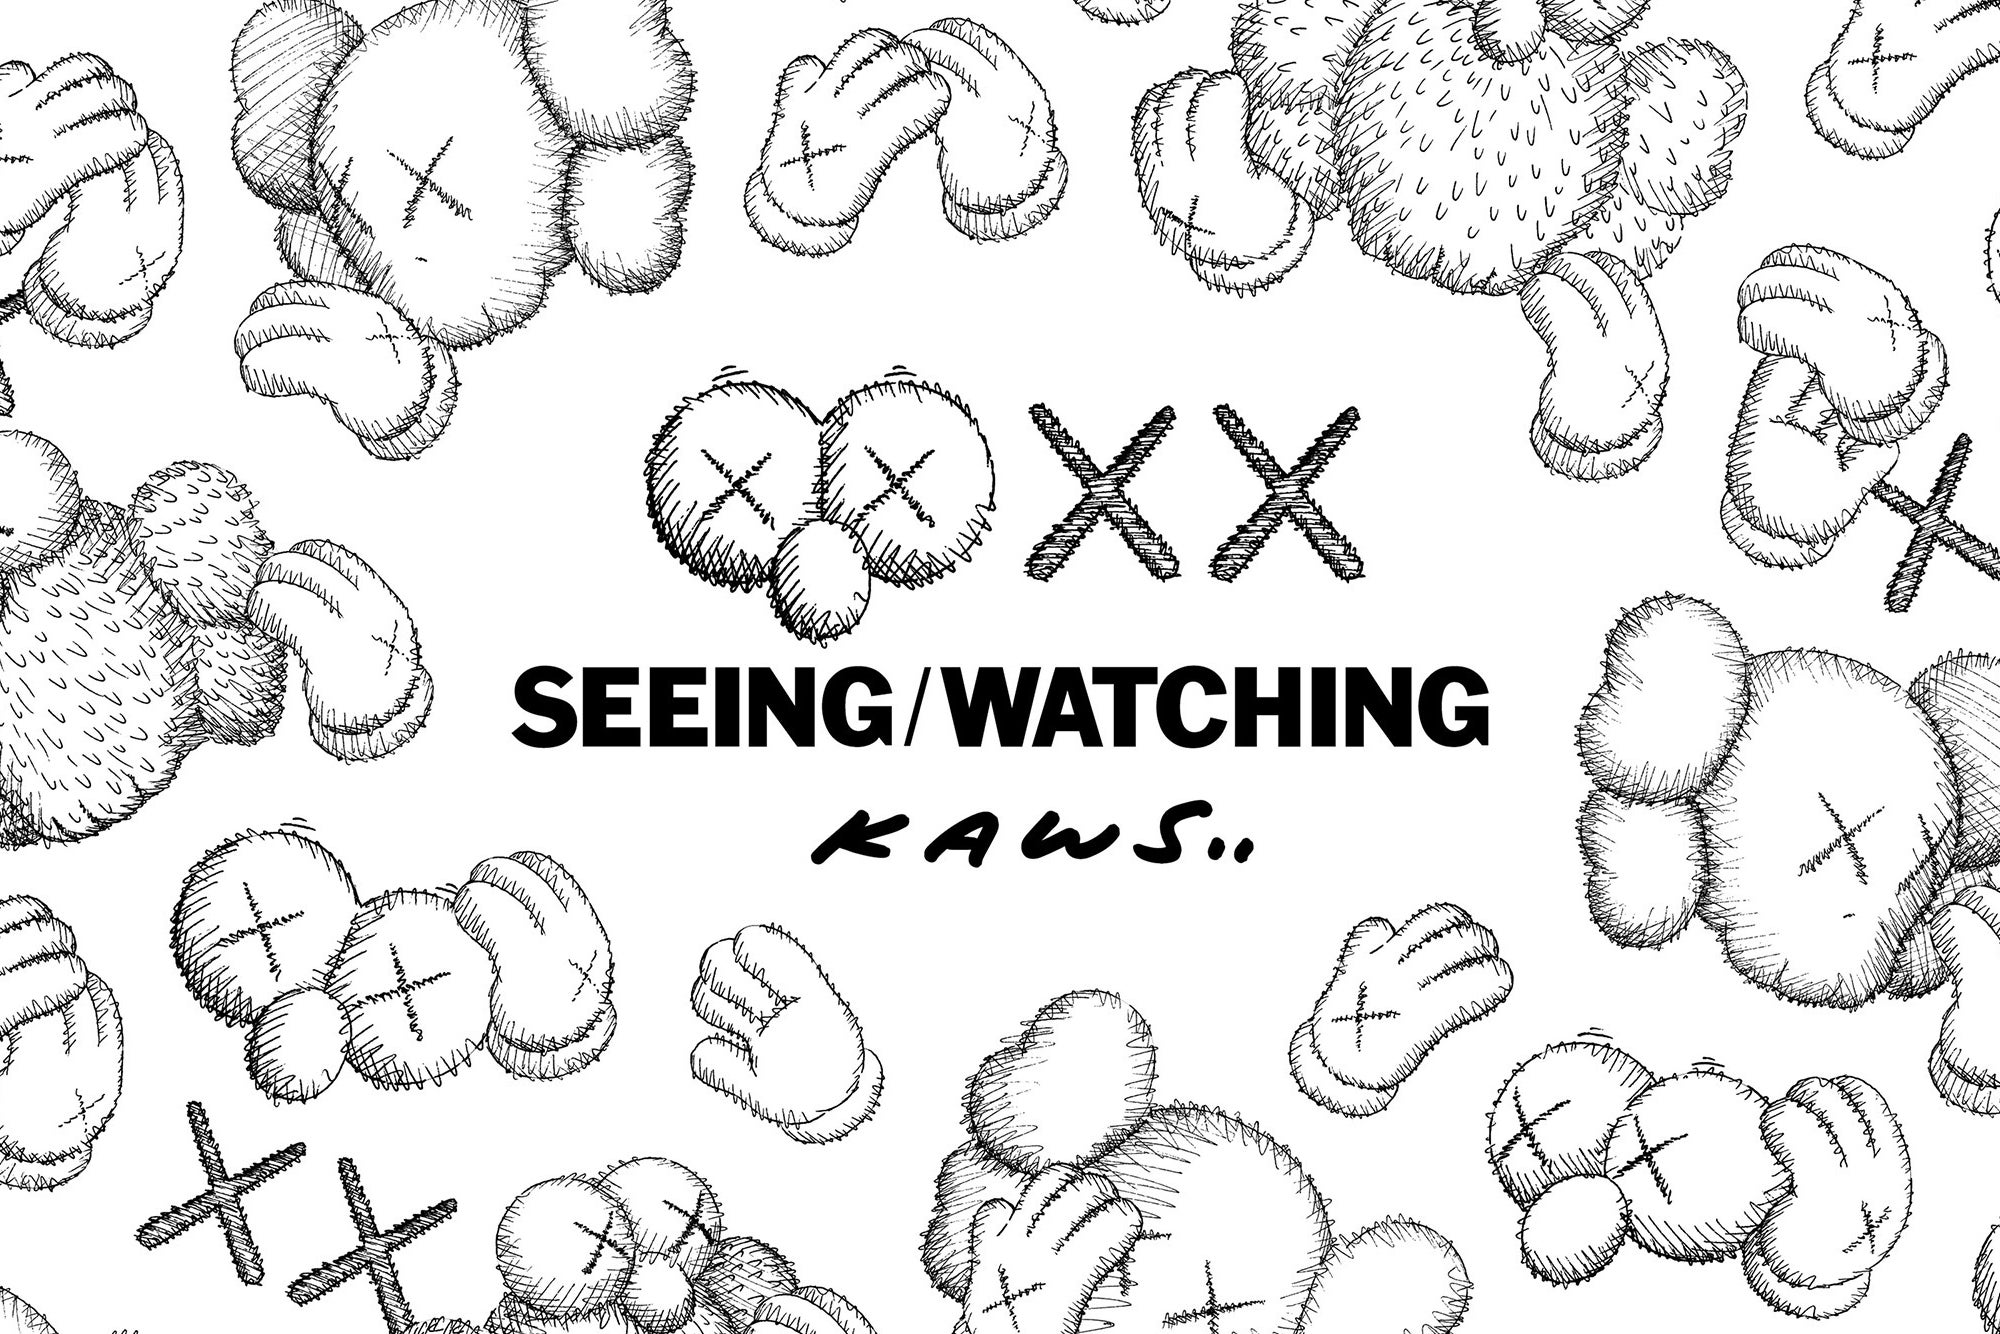 KAWS Unveils New SEEING/WATCHING Sculpture